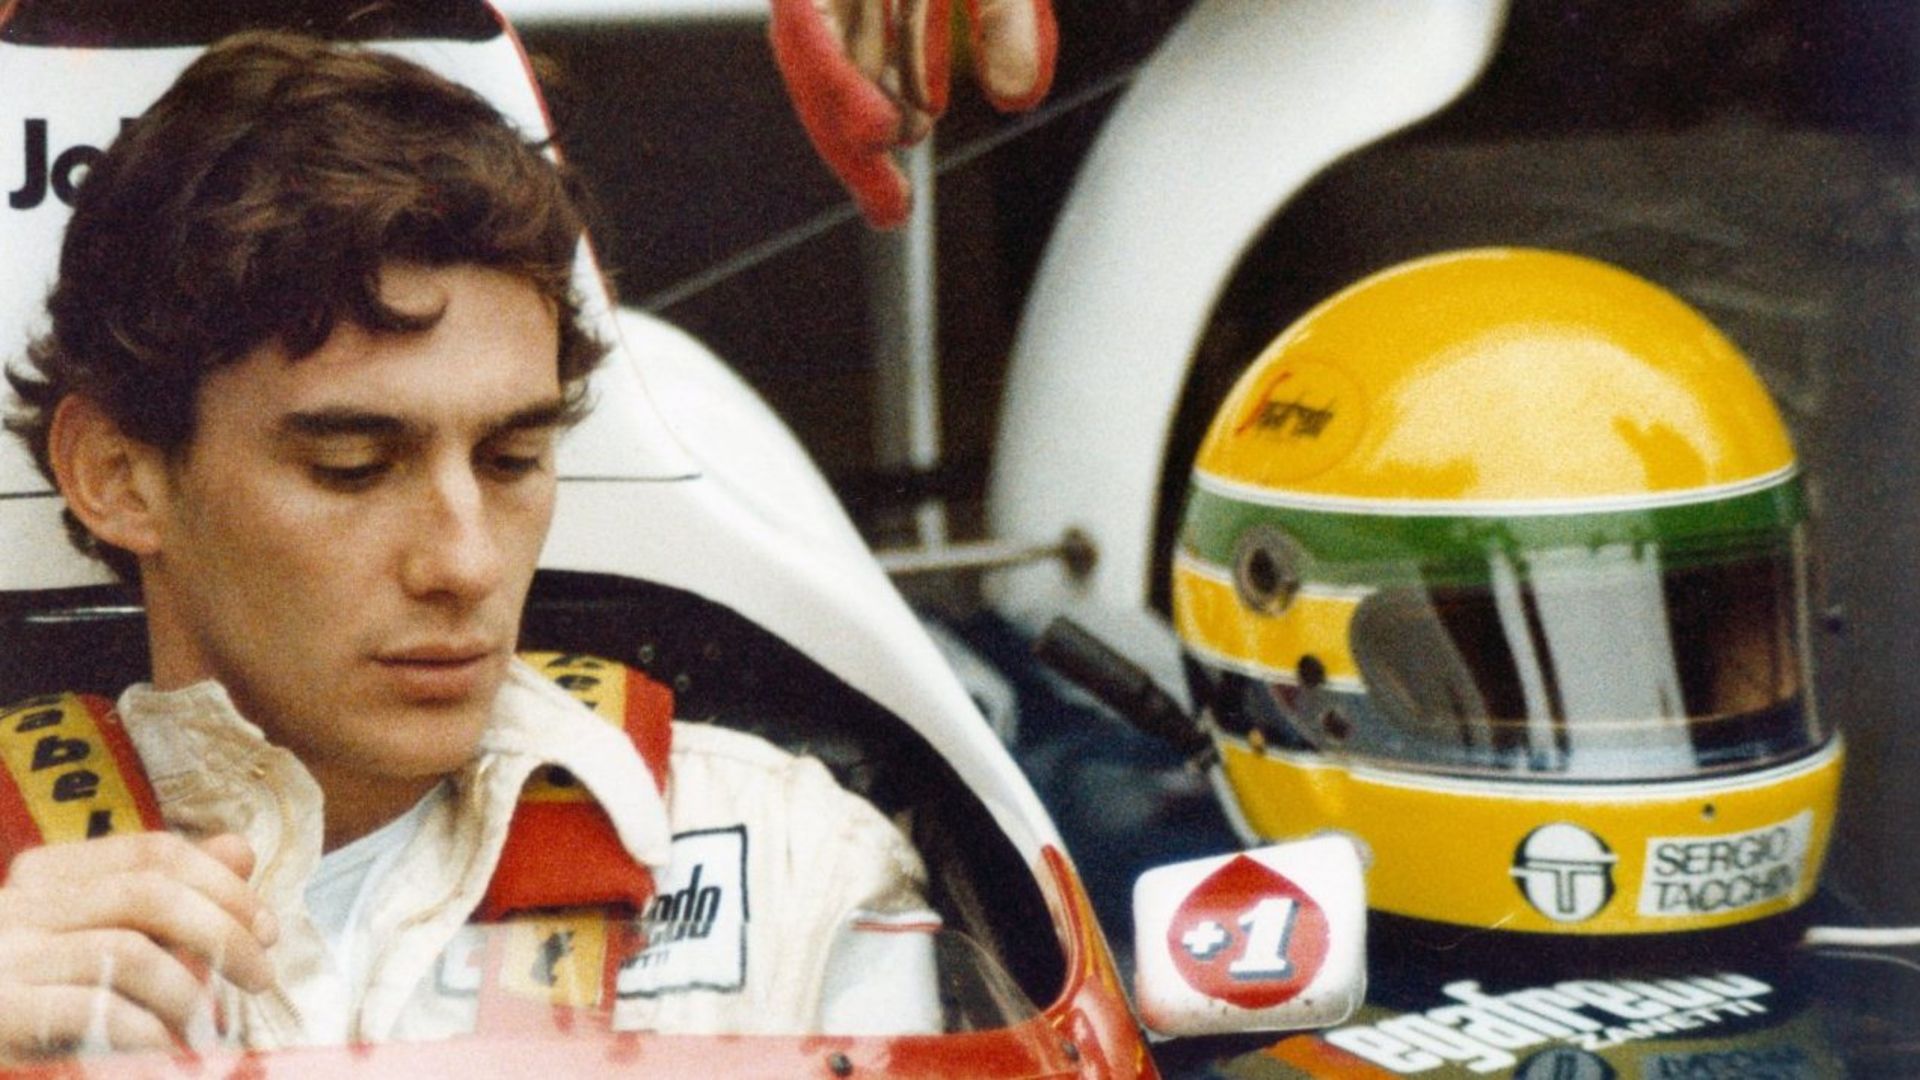 Senna Backdrop